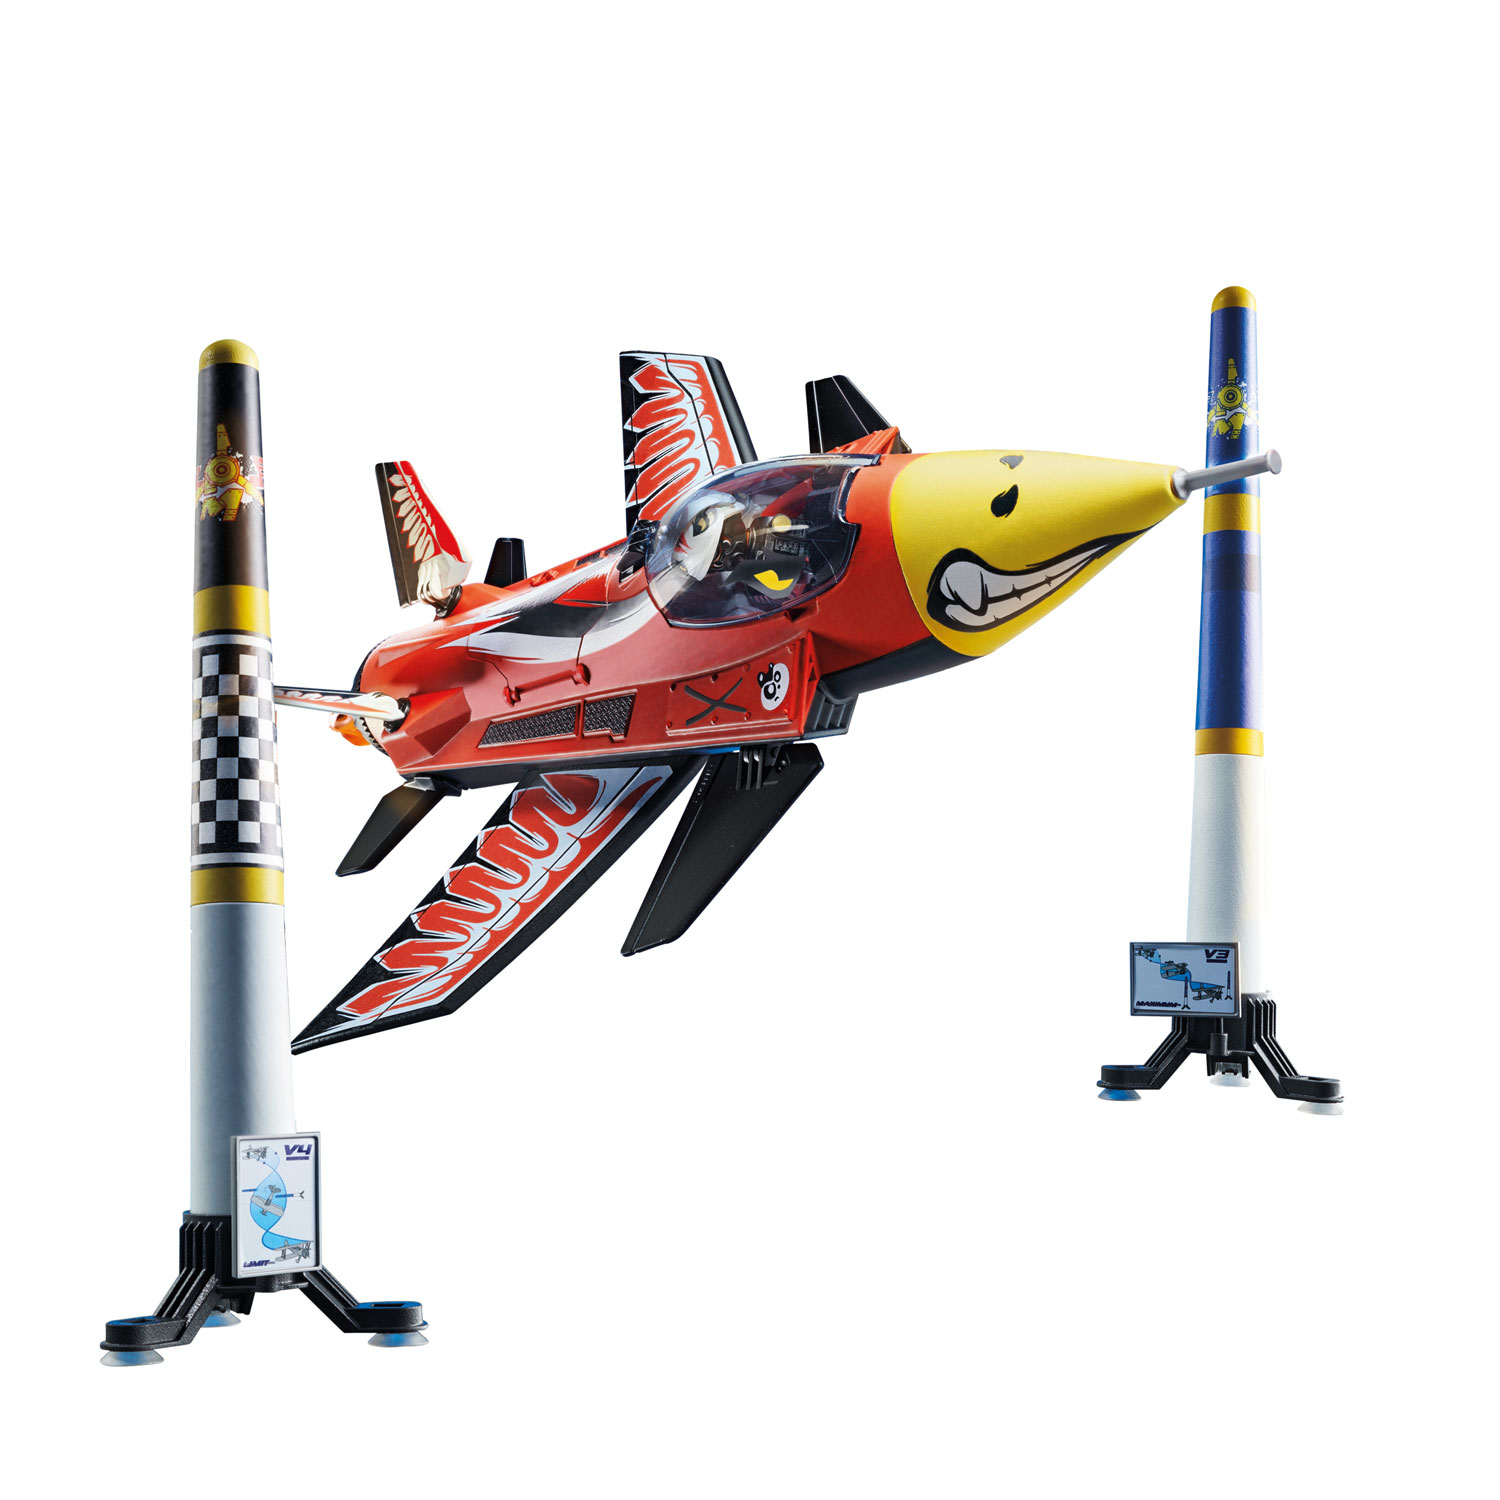 Playmobil Stunt Show Air Jet Aigle - 70832